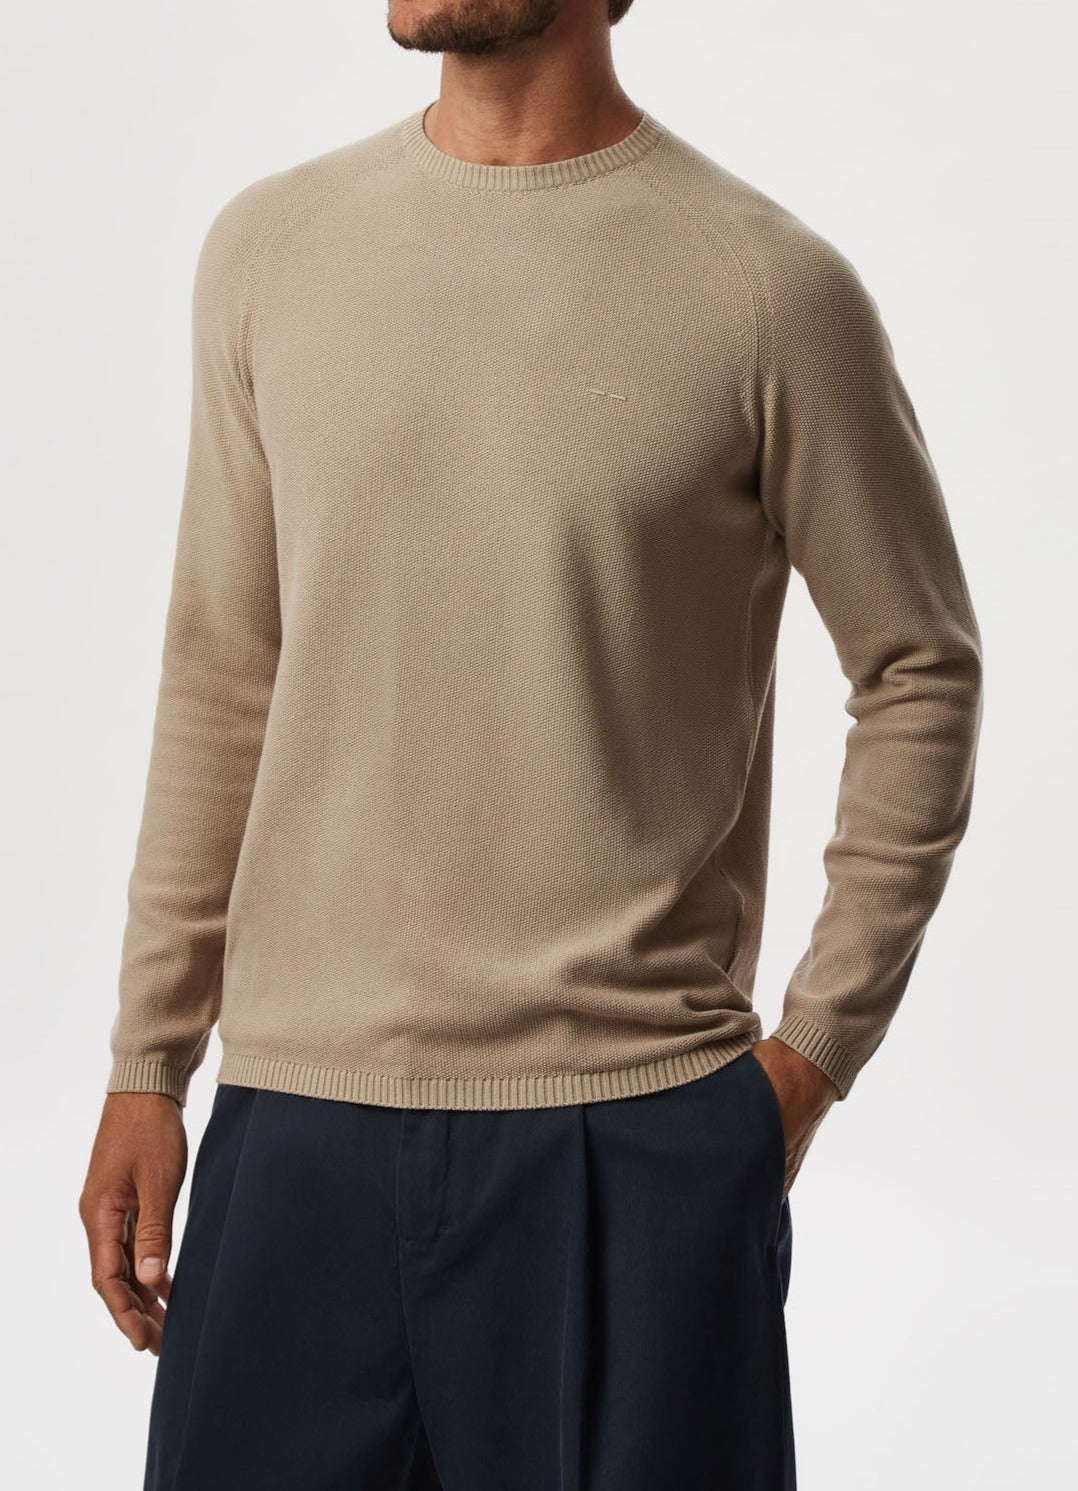 Men Jersey | Sand Cotton Sweater With Striped Texture by Spanish designer Adolfo Dominguez